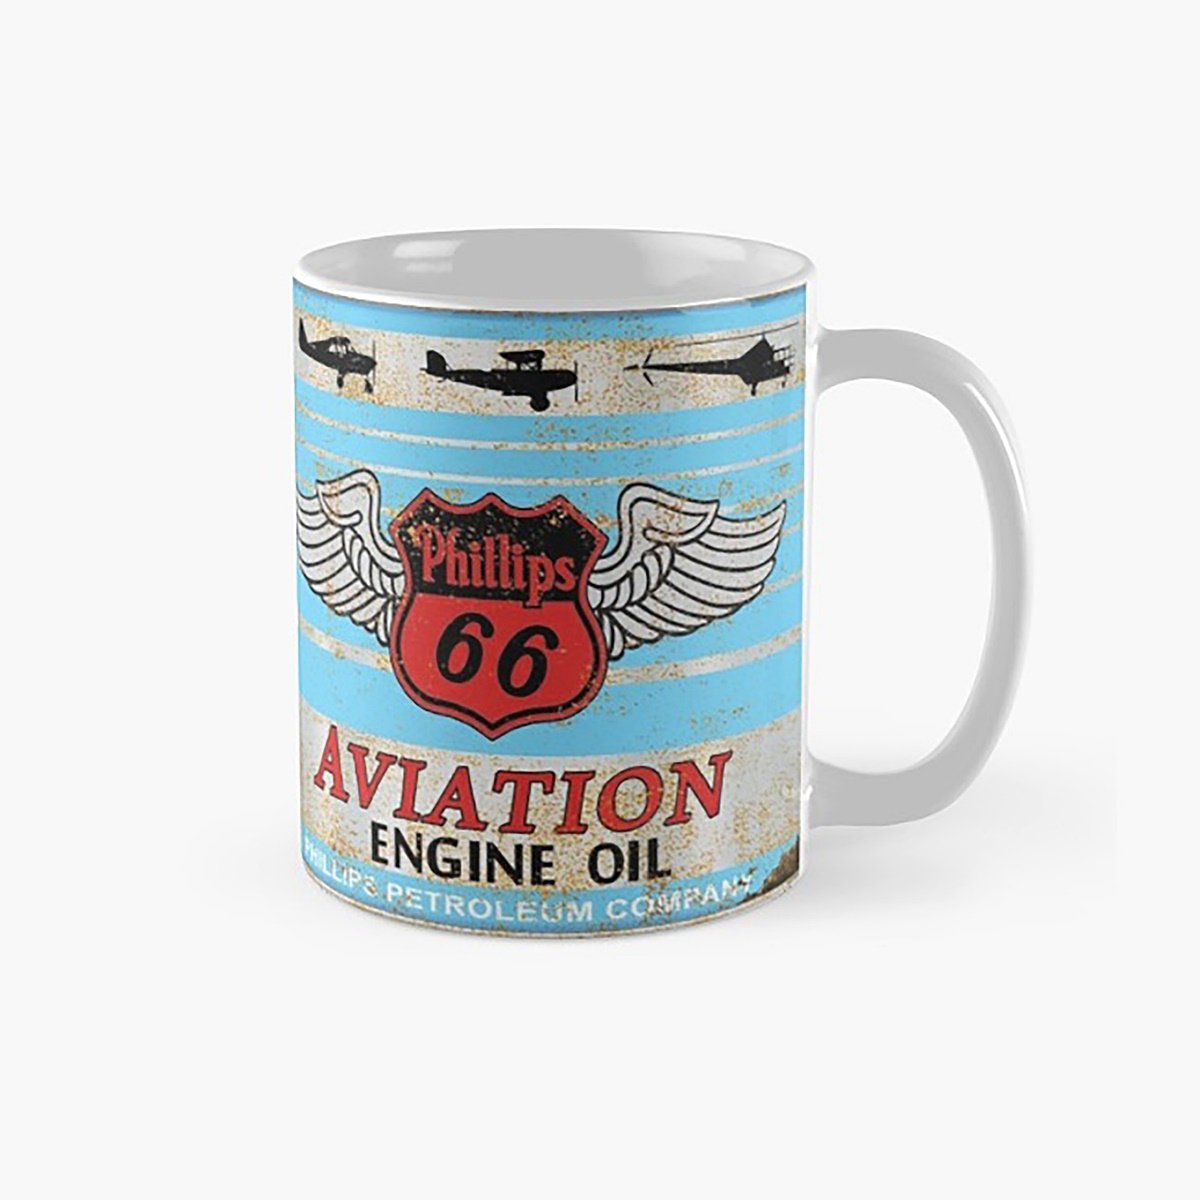 Aviation Engine Oil Mug